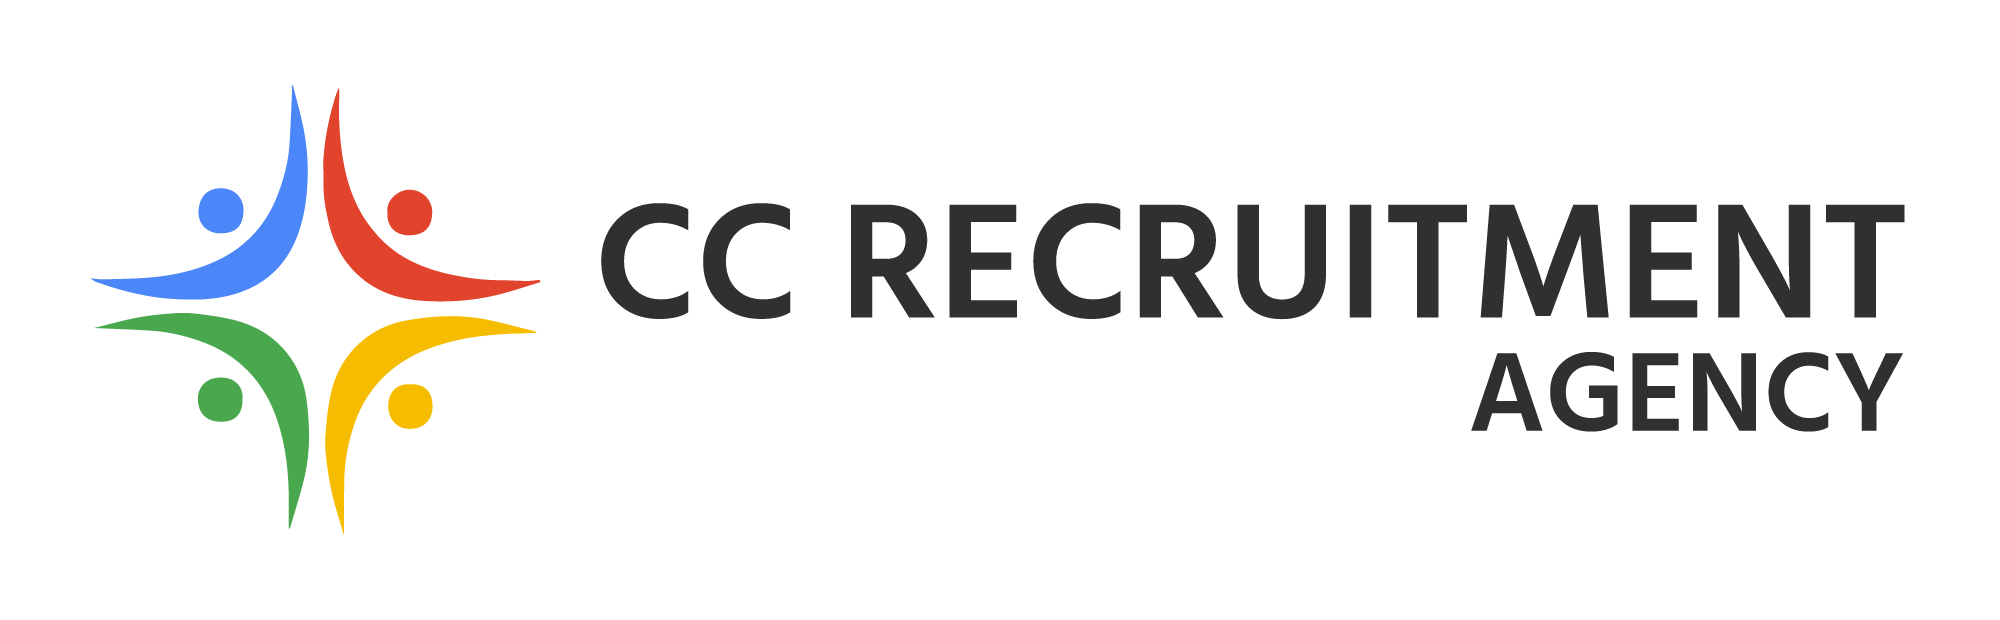 CC Recruitment Agency